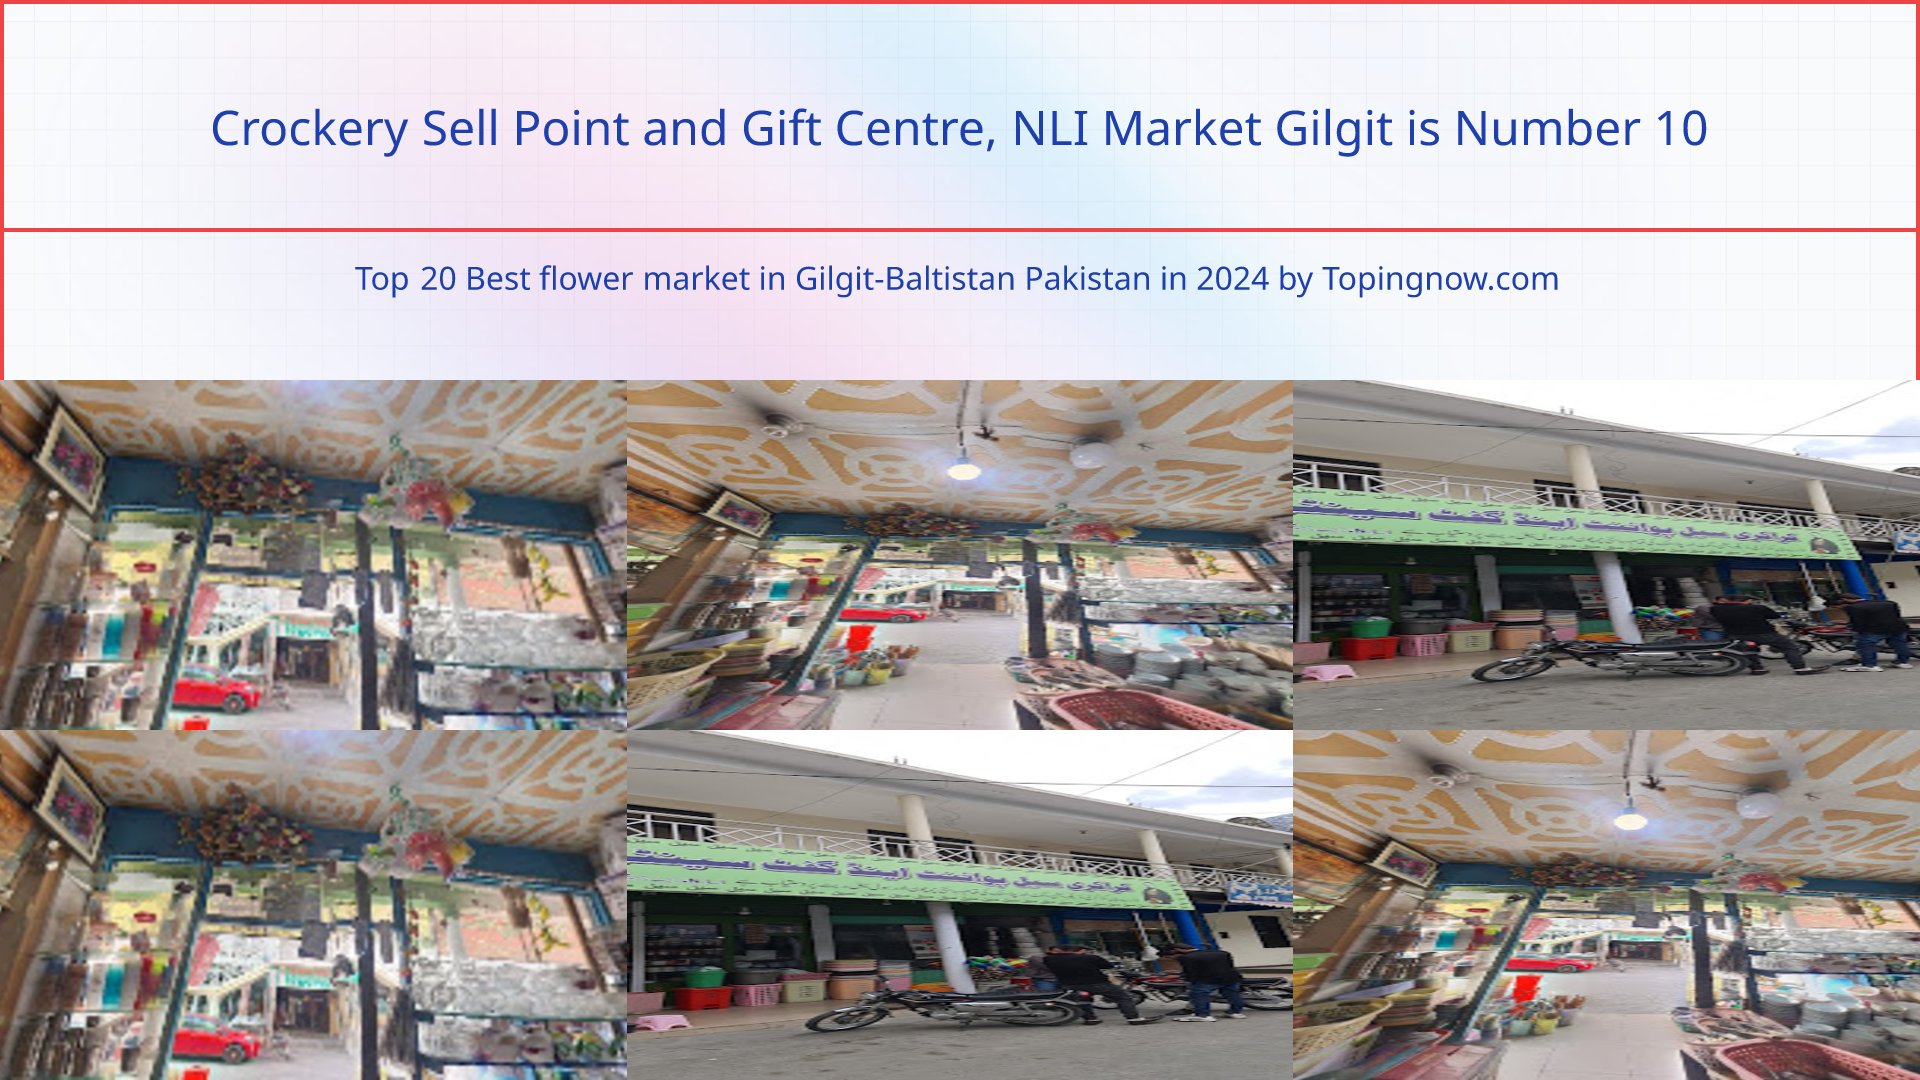 Crockery Sell Point and Gift Centre, NLI Market Gilgit: Top 20 Best flower market in Gilgit-Baltistan Pakistan in 2024